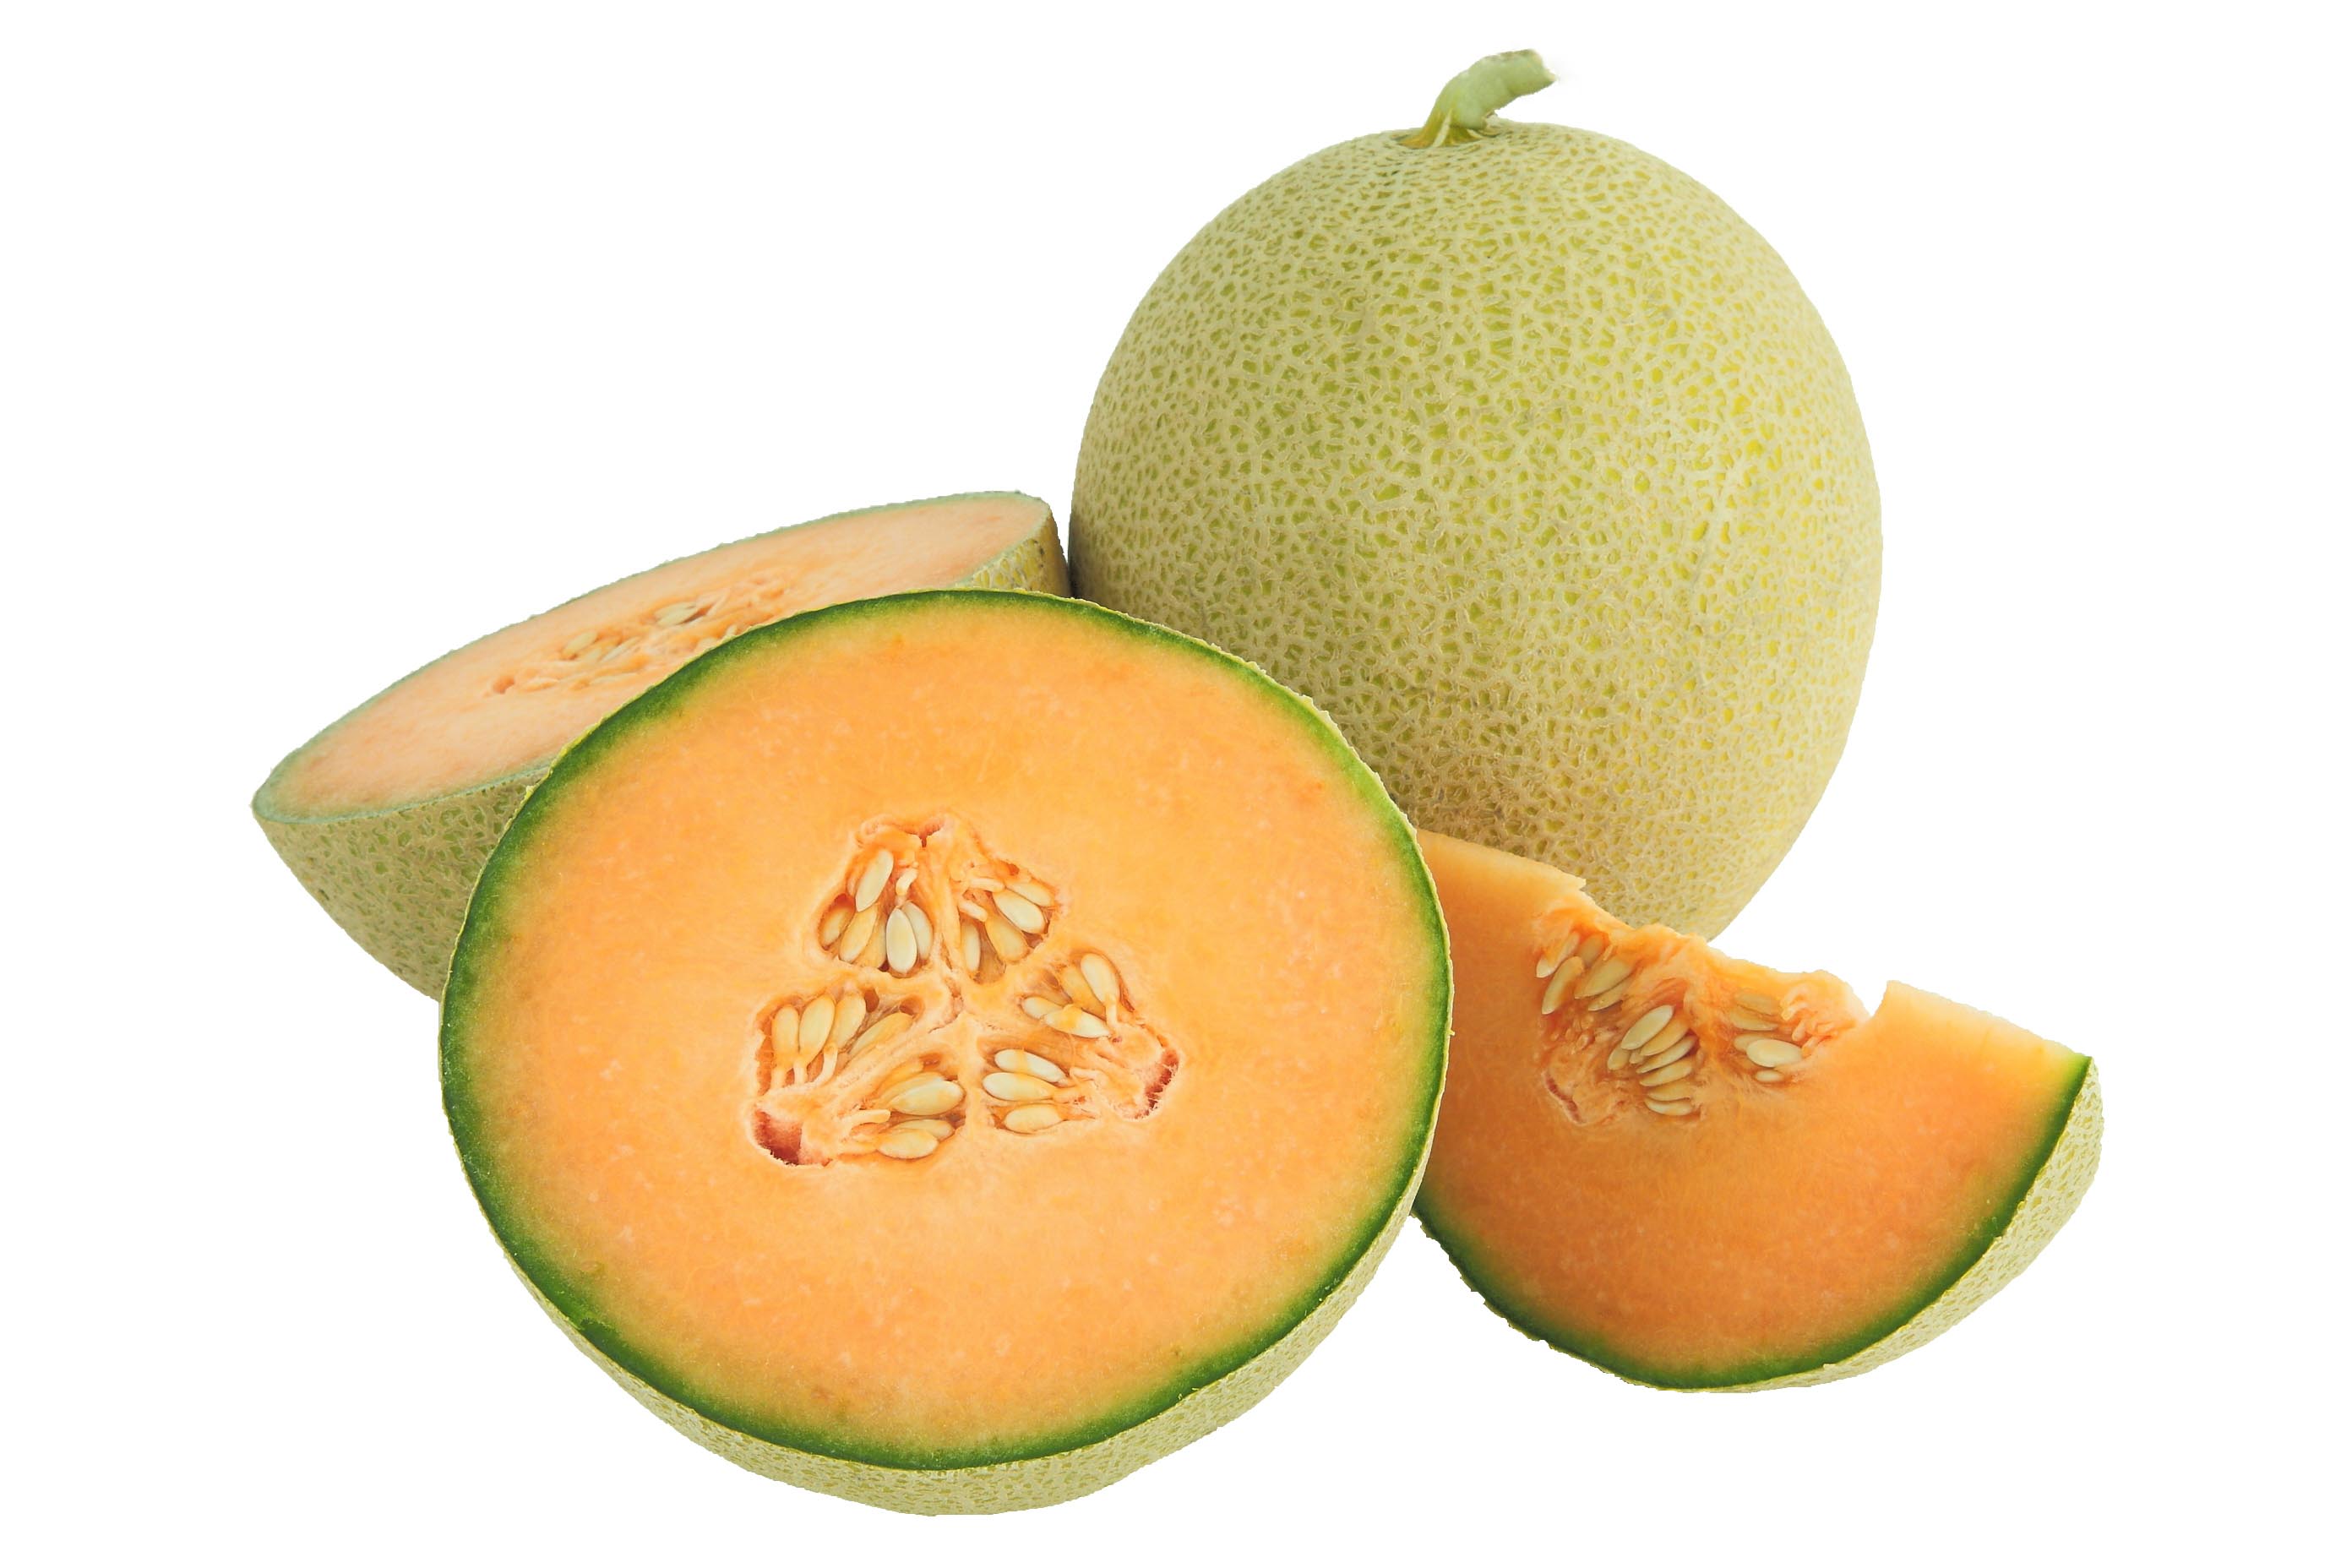 Caribbean Gold RZ F1 Hybrid Melon - Allied Botanical Corporation